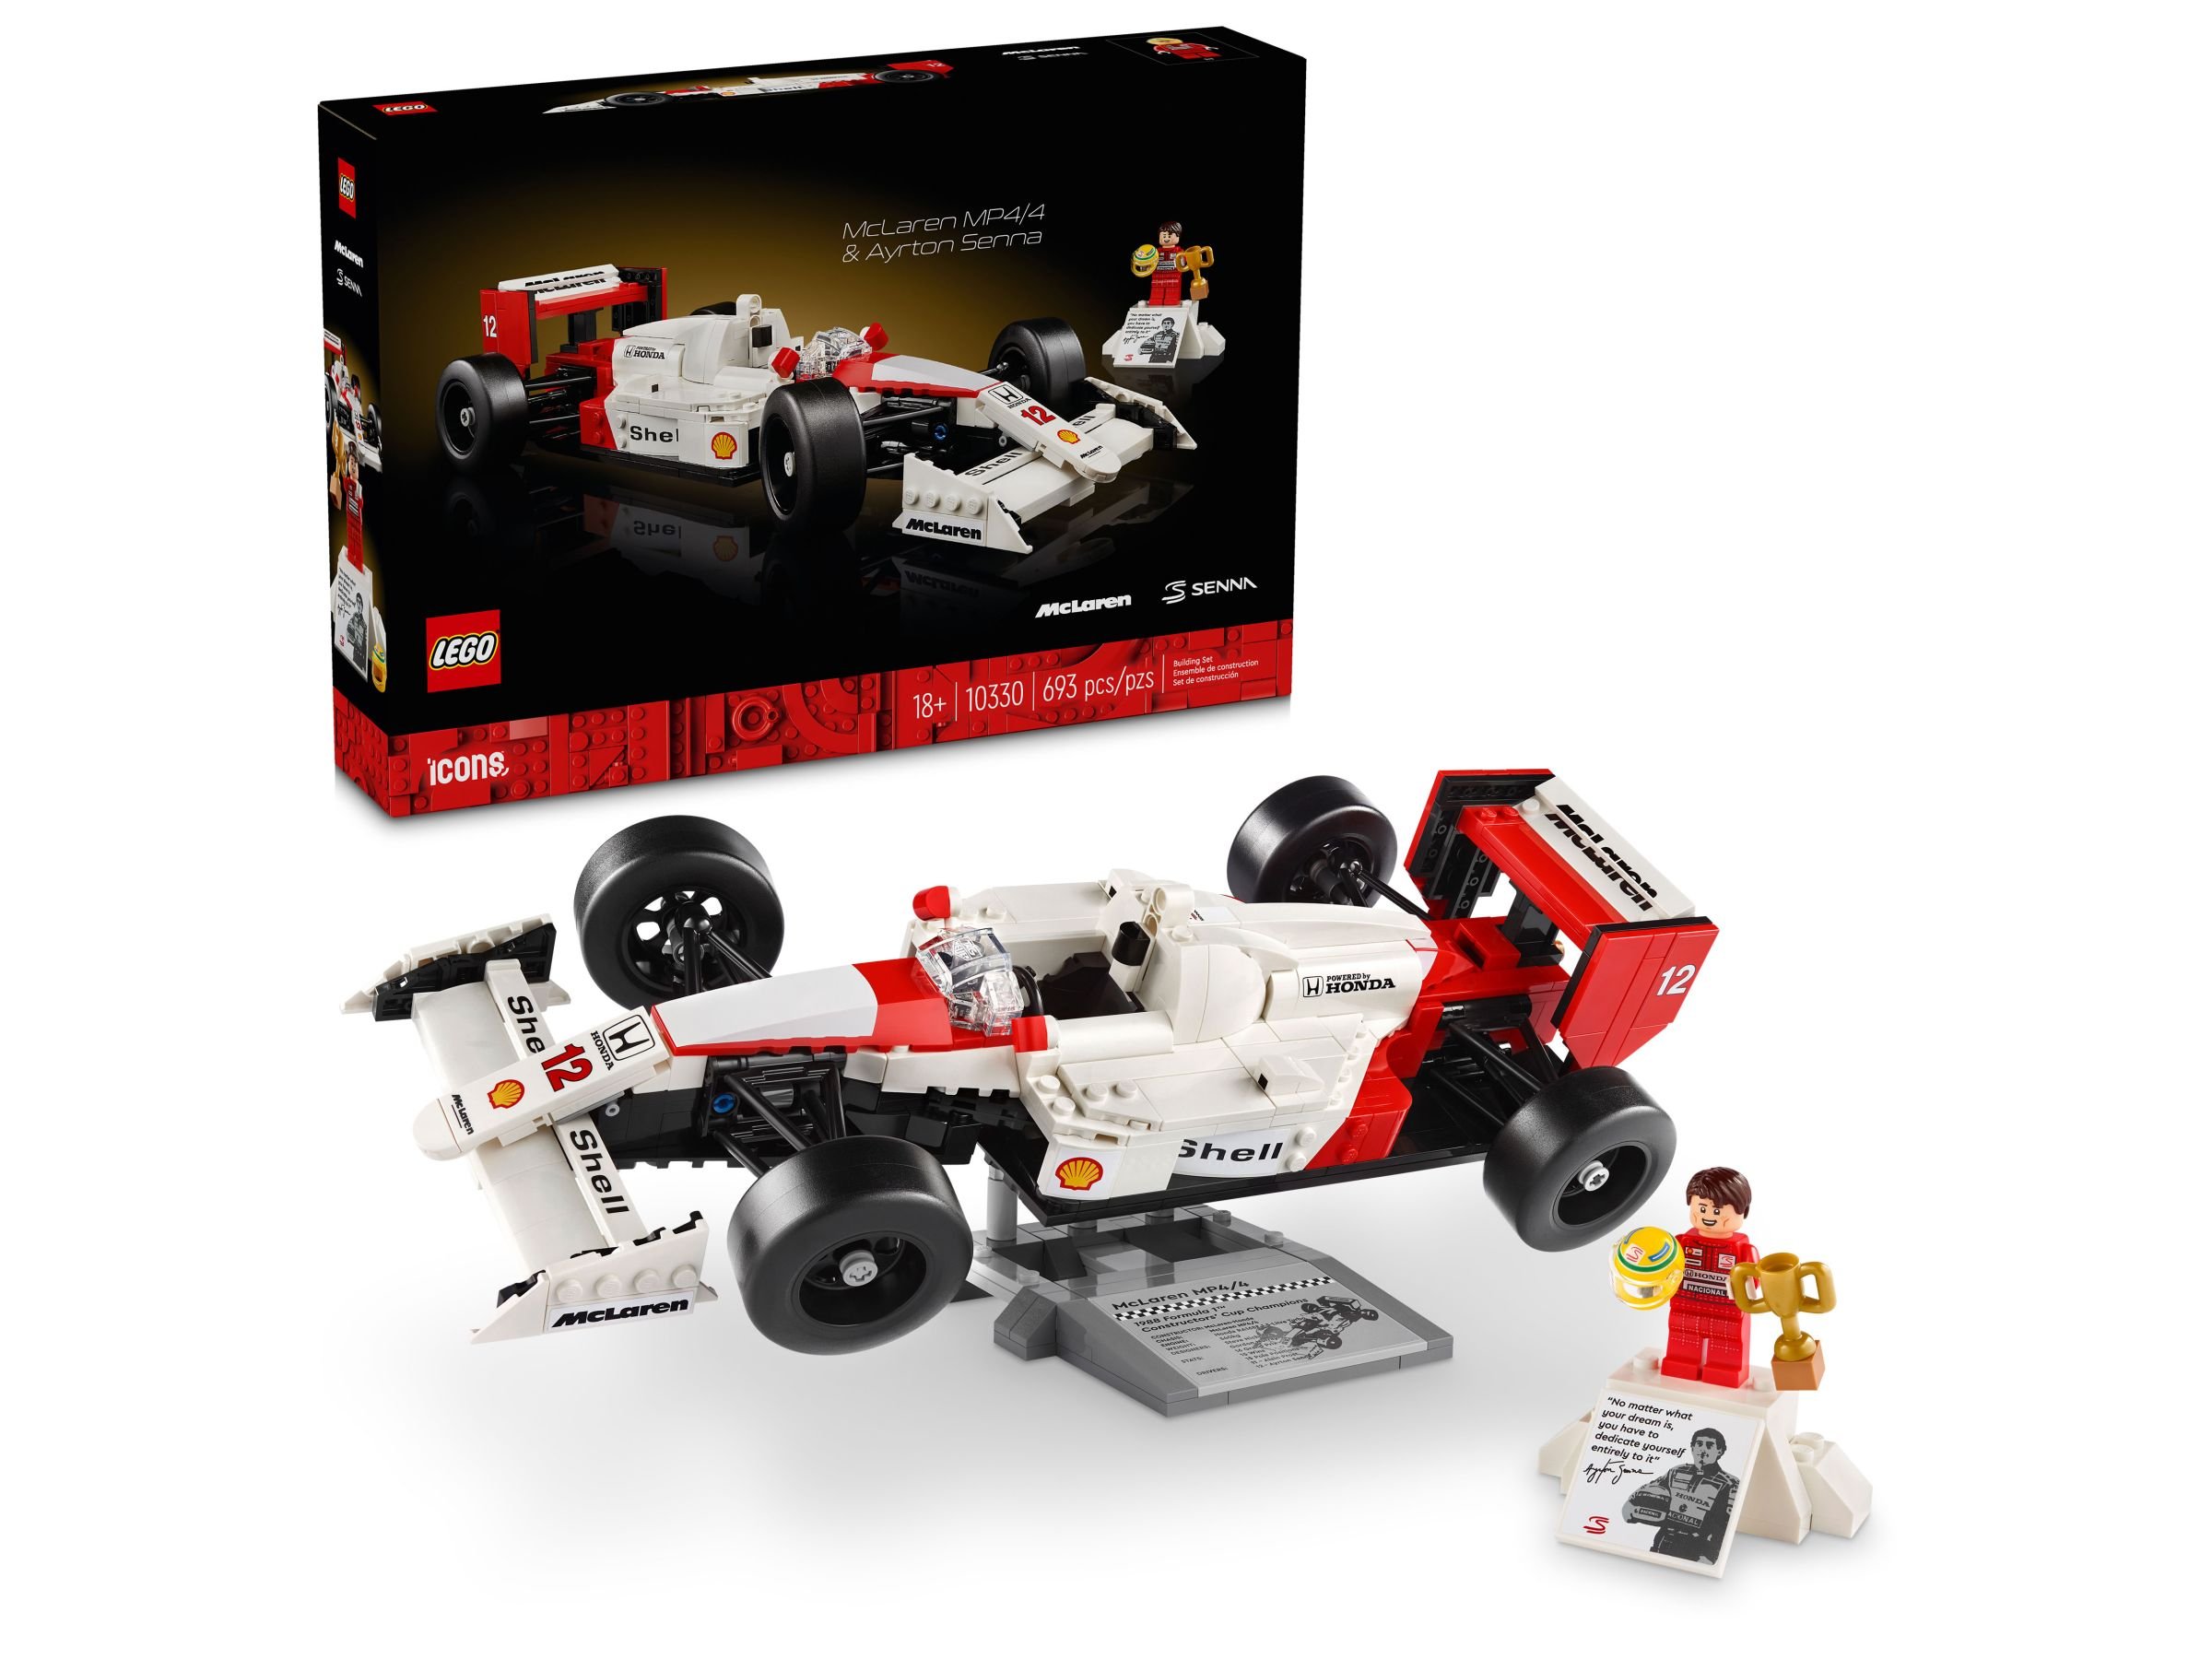 LEGO Advanced Models 10330 McLaren MP4/4 & Ayrton Senna LEGO_10330_boxprod_v39.jpg